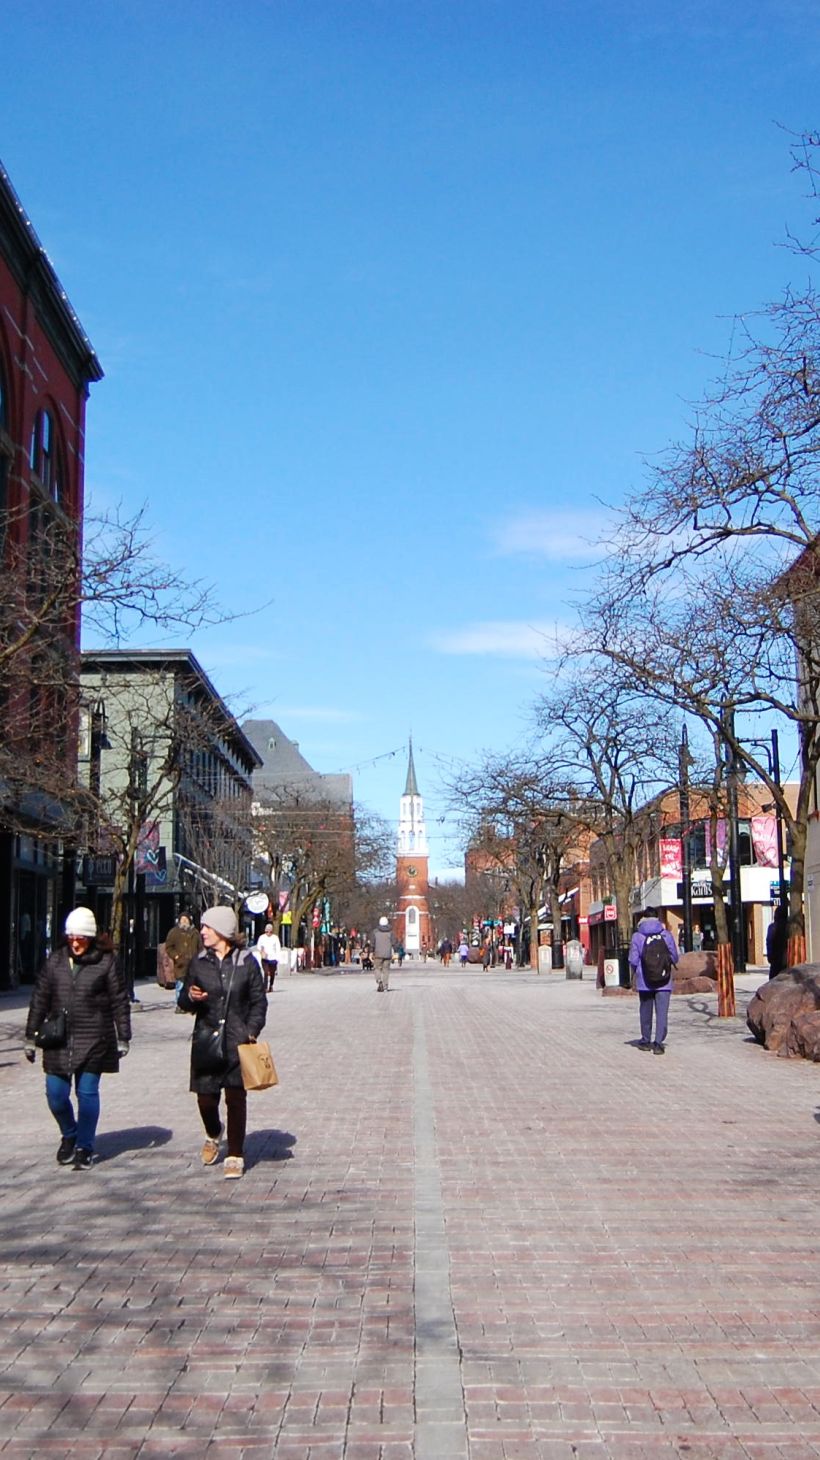 People walk on Church Street in downtown Burlington, Vermont, US